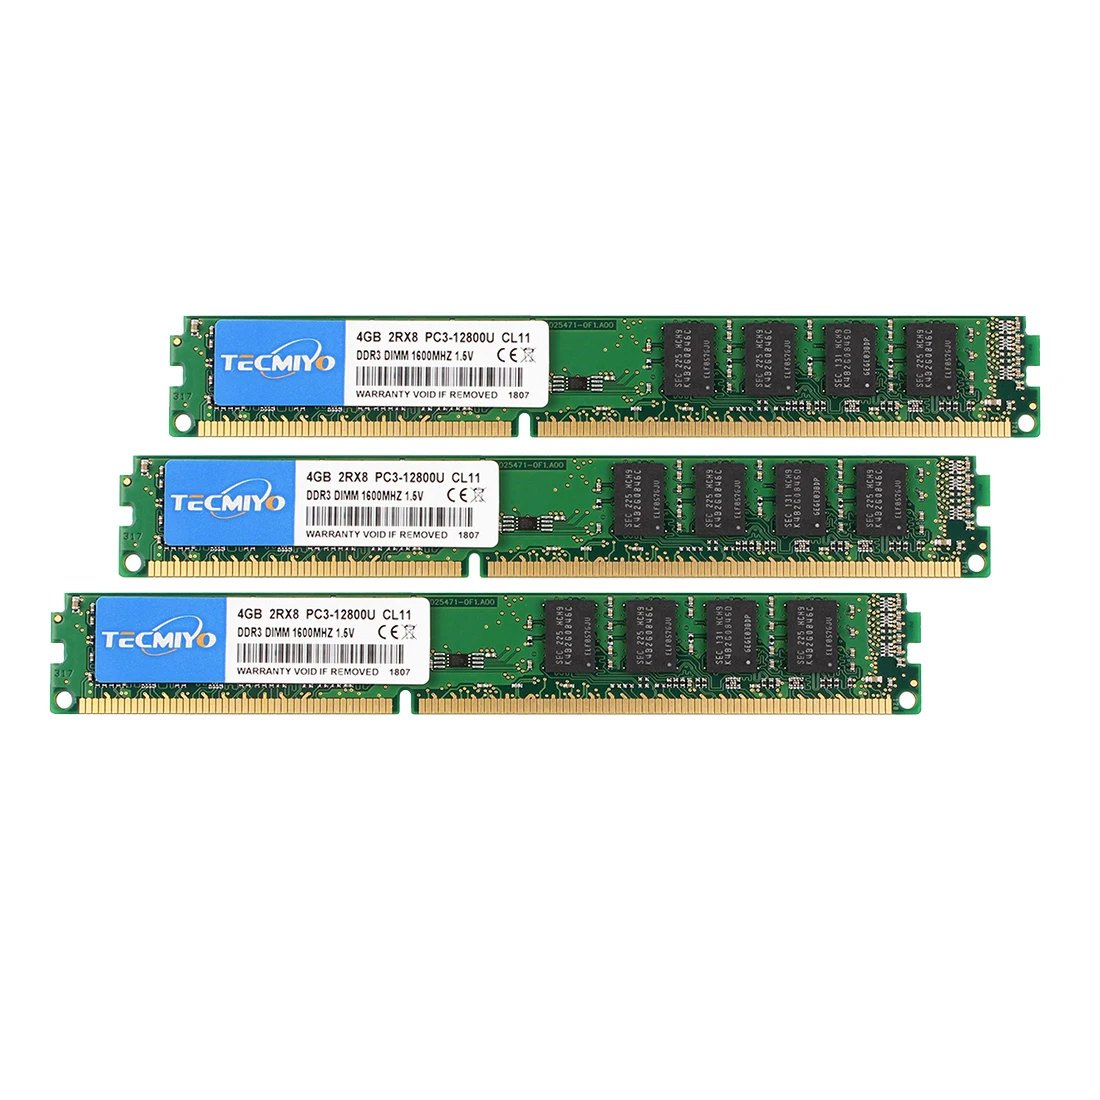 

Cheap price DDR3 4GB RAM PC3 12800U 1600MHZ UDIMM PC Ram Memory 4gb ddr3 Ram for desktop